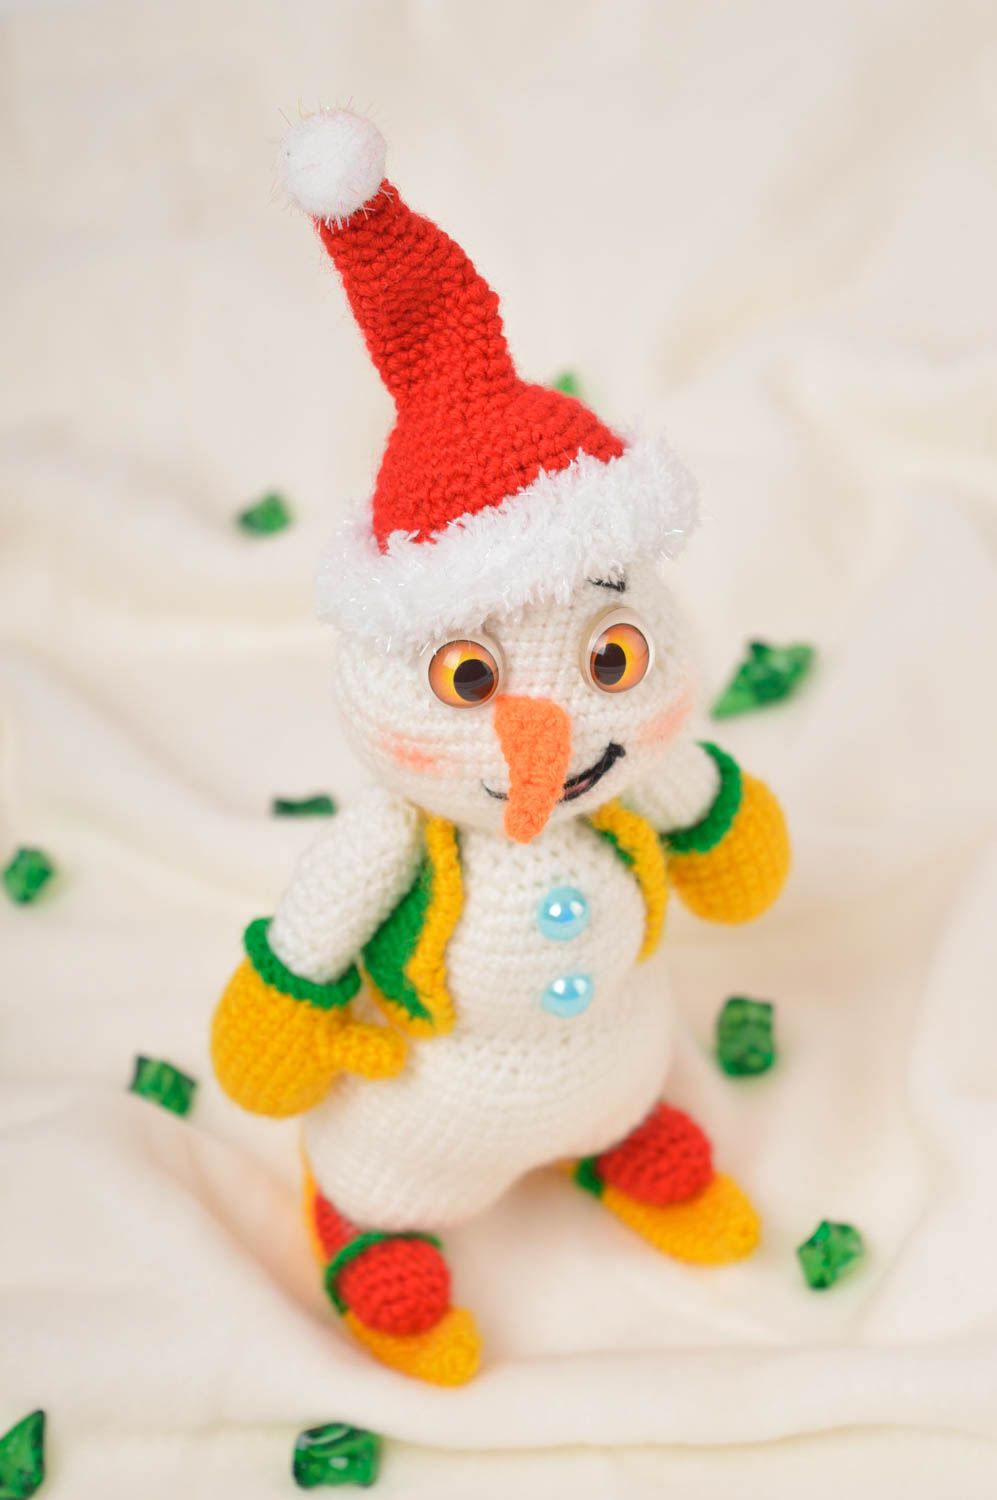 Designer toy hand-crocheted toys for children handmade stuffed toy winter decor photo 1